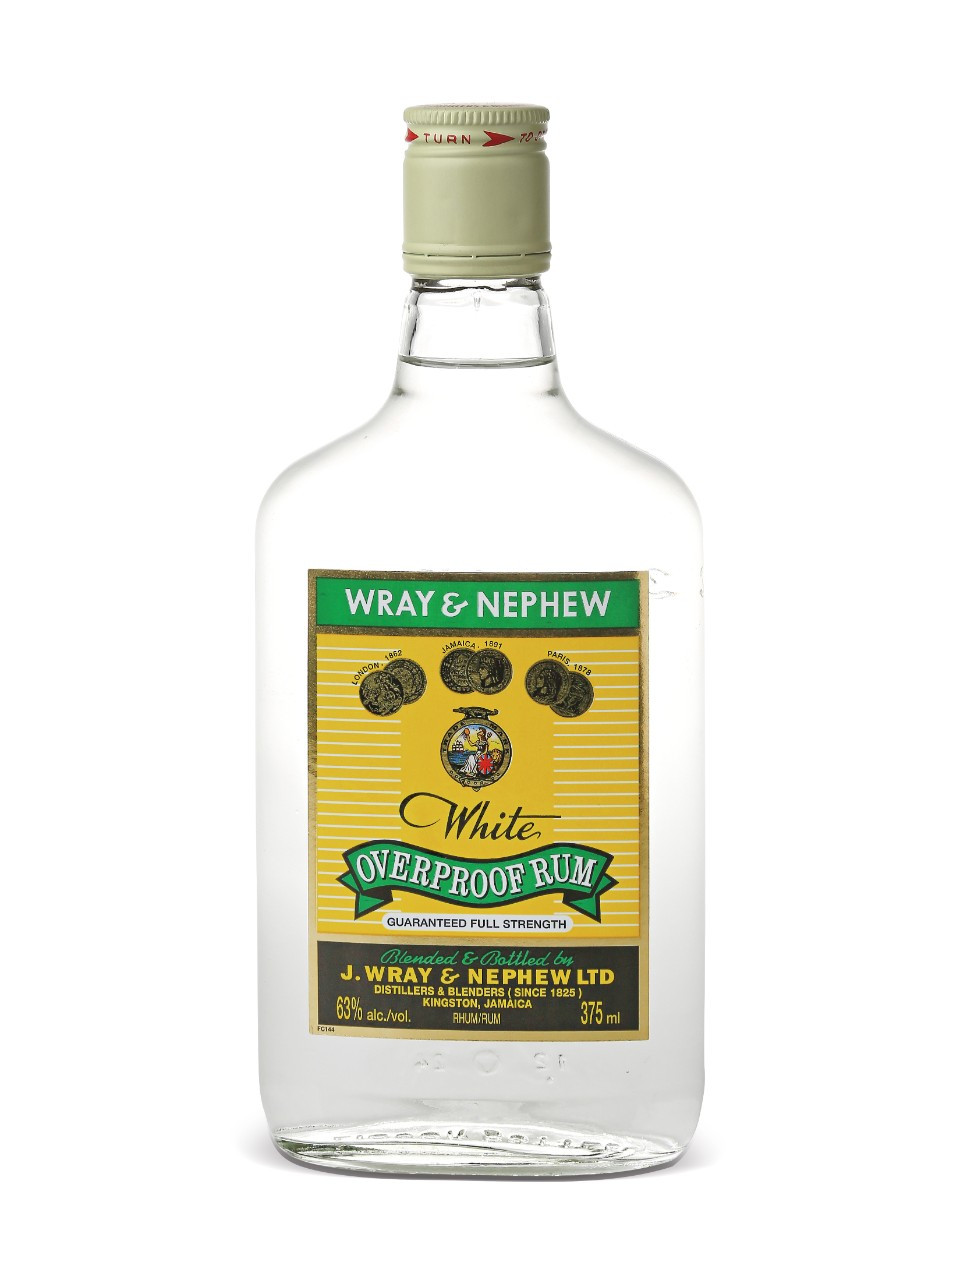 Wray & nephew white overproof rum  375 ml bottle